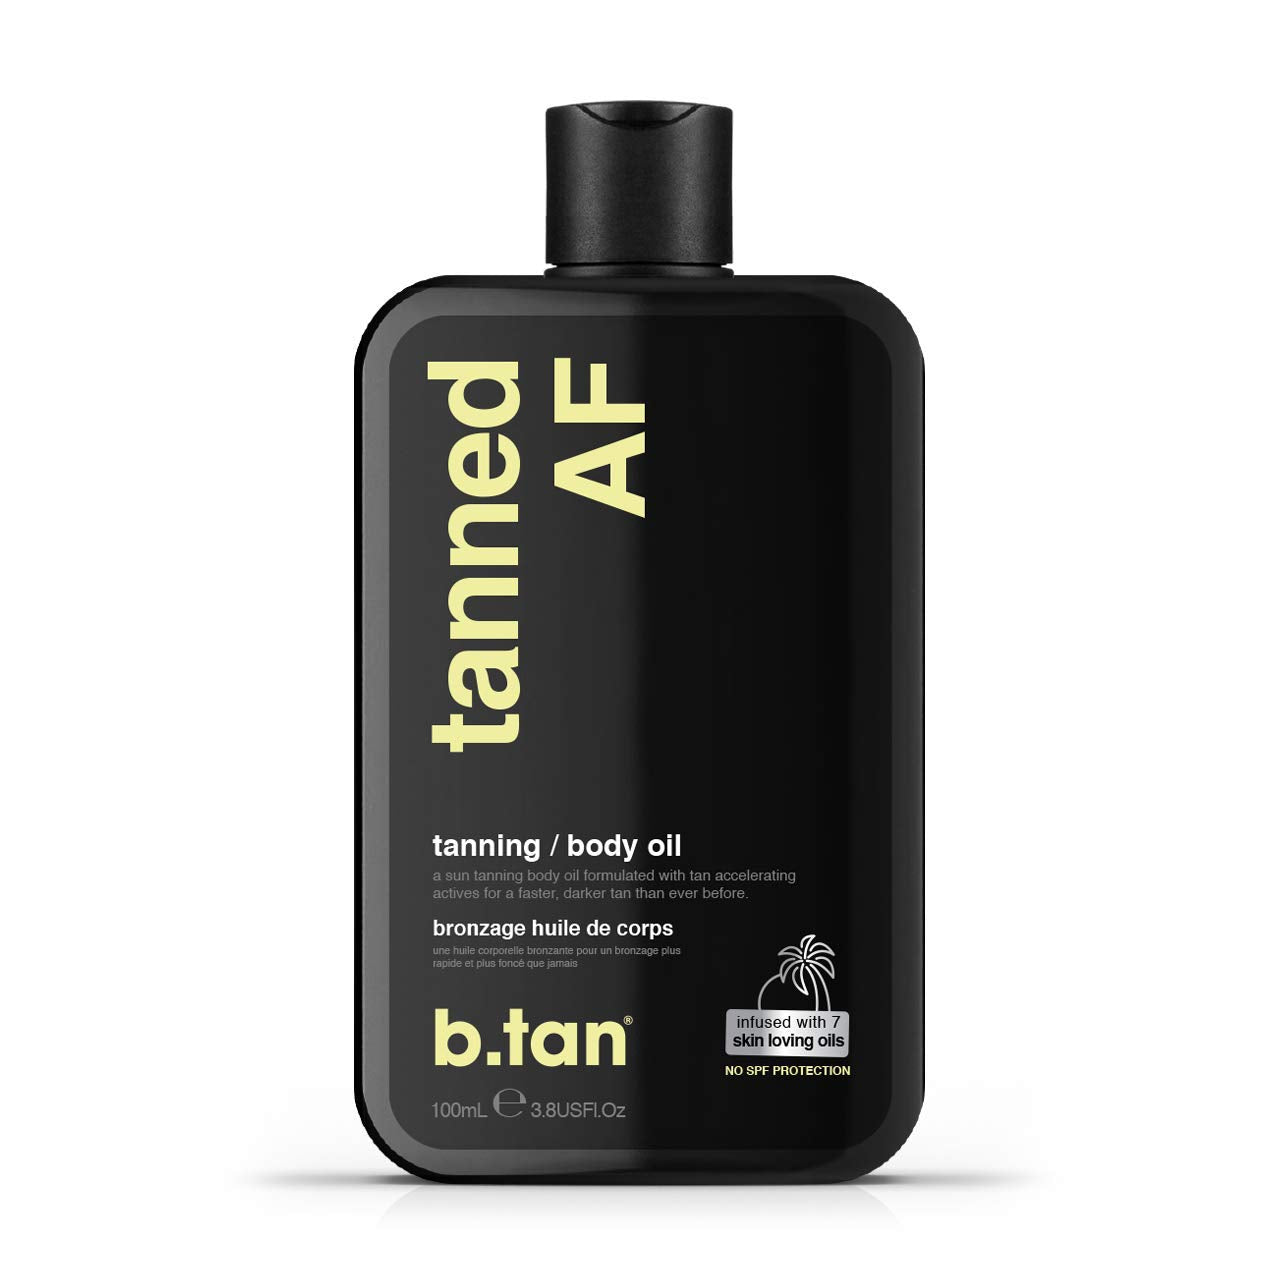 b.tan Body Oil